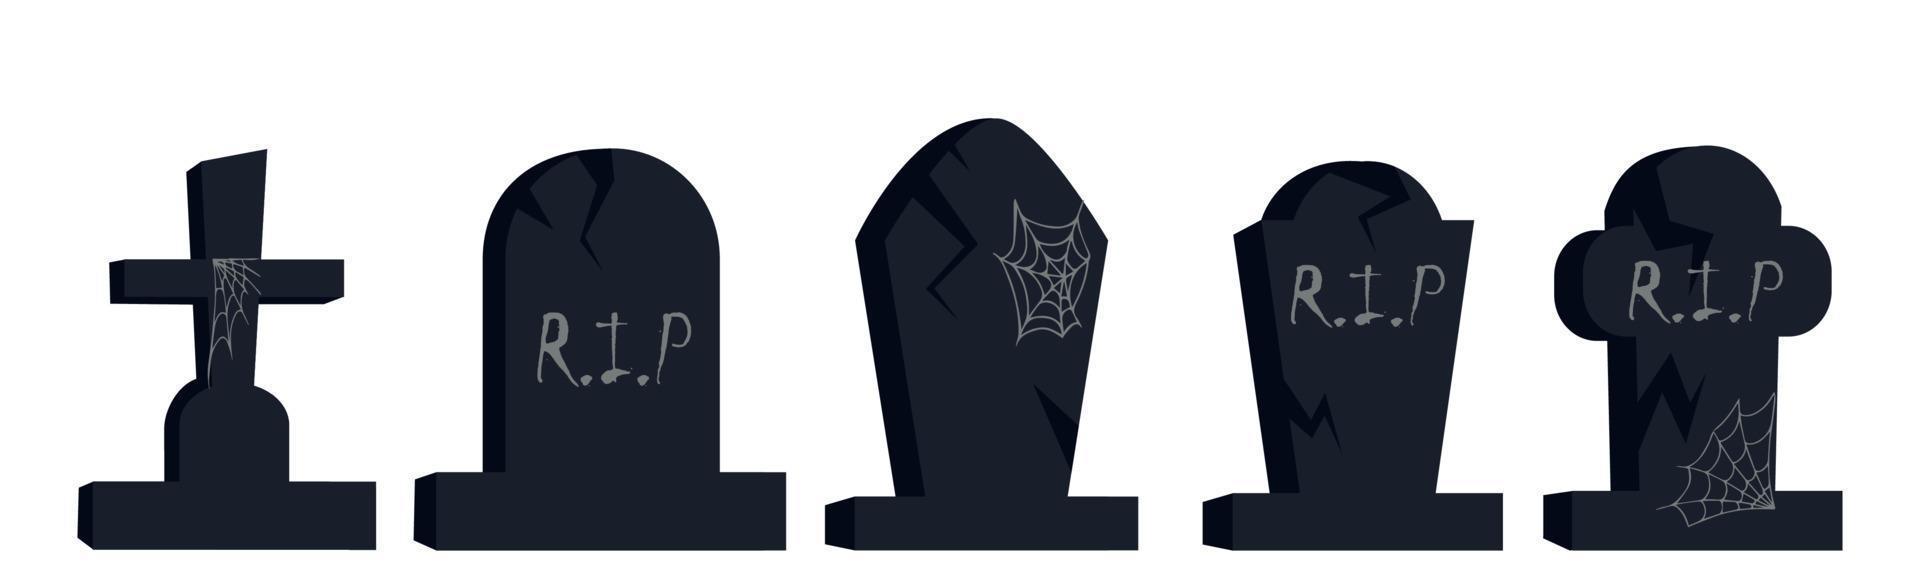 Selección de lápidas del cementerio de Halloween sobre un fondo blanco - vector